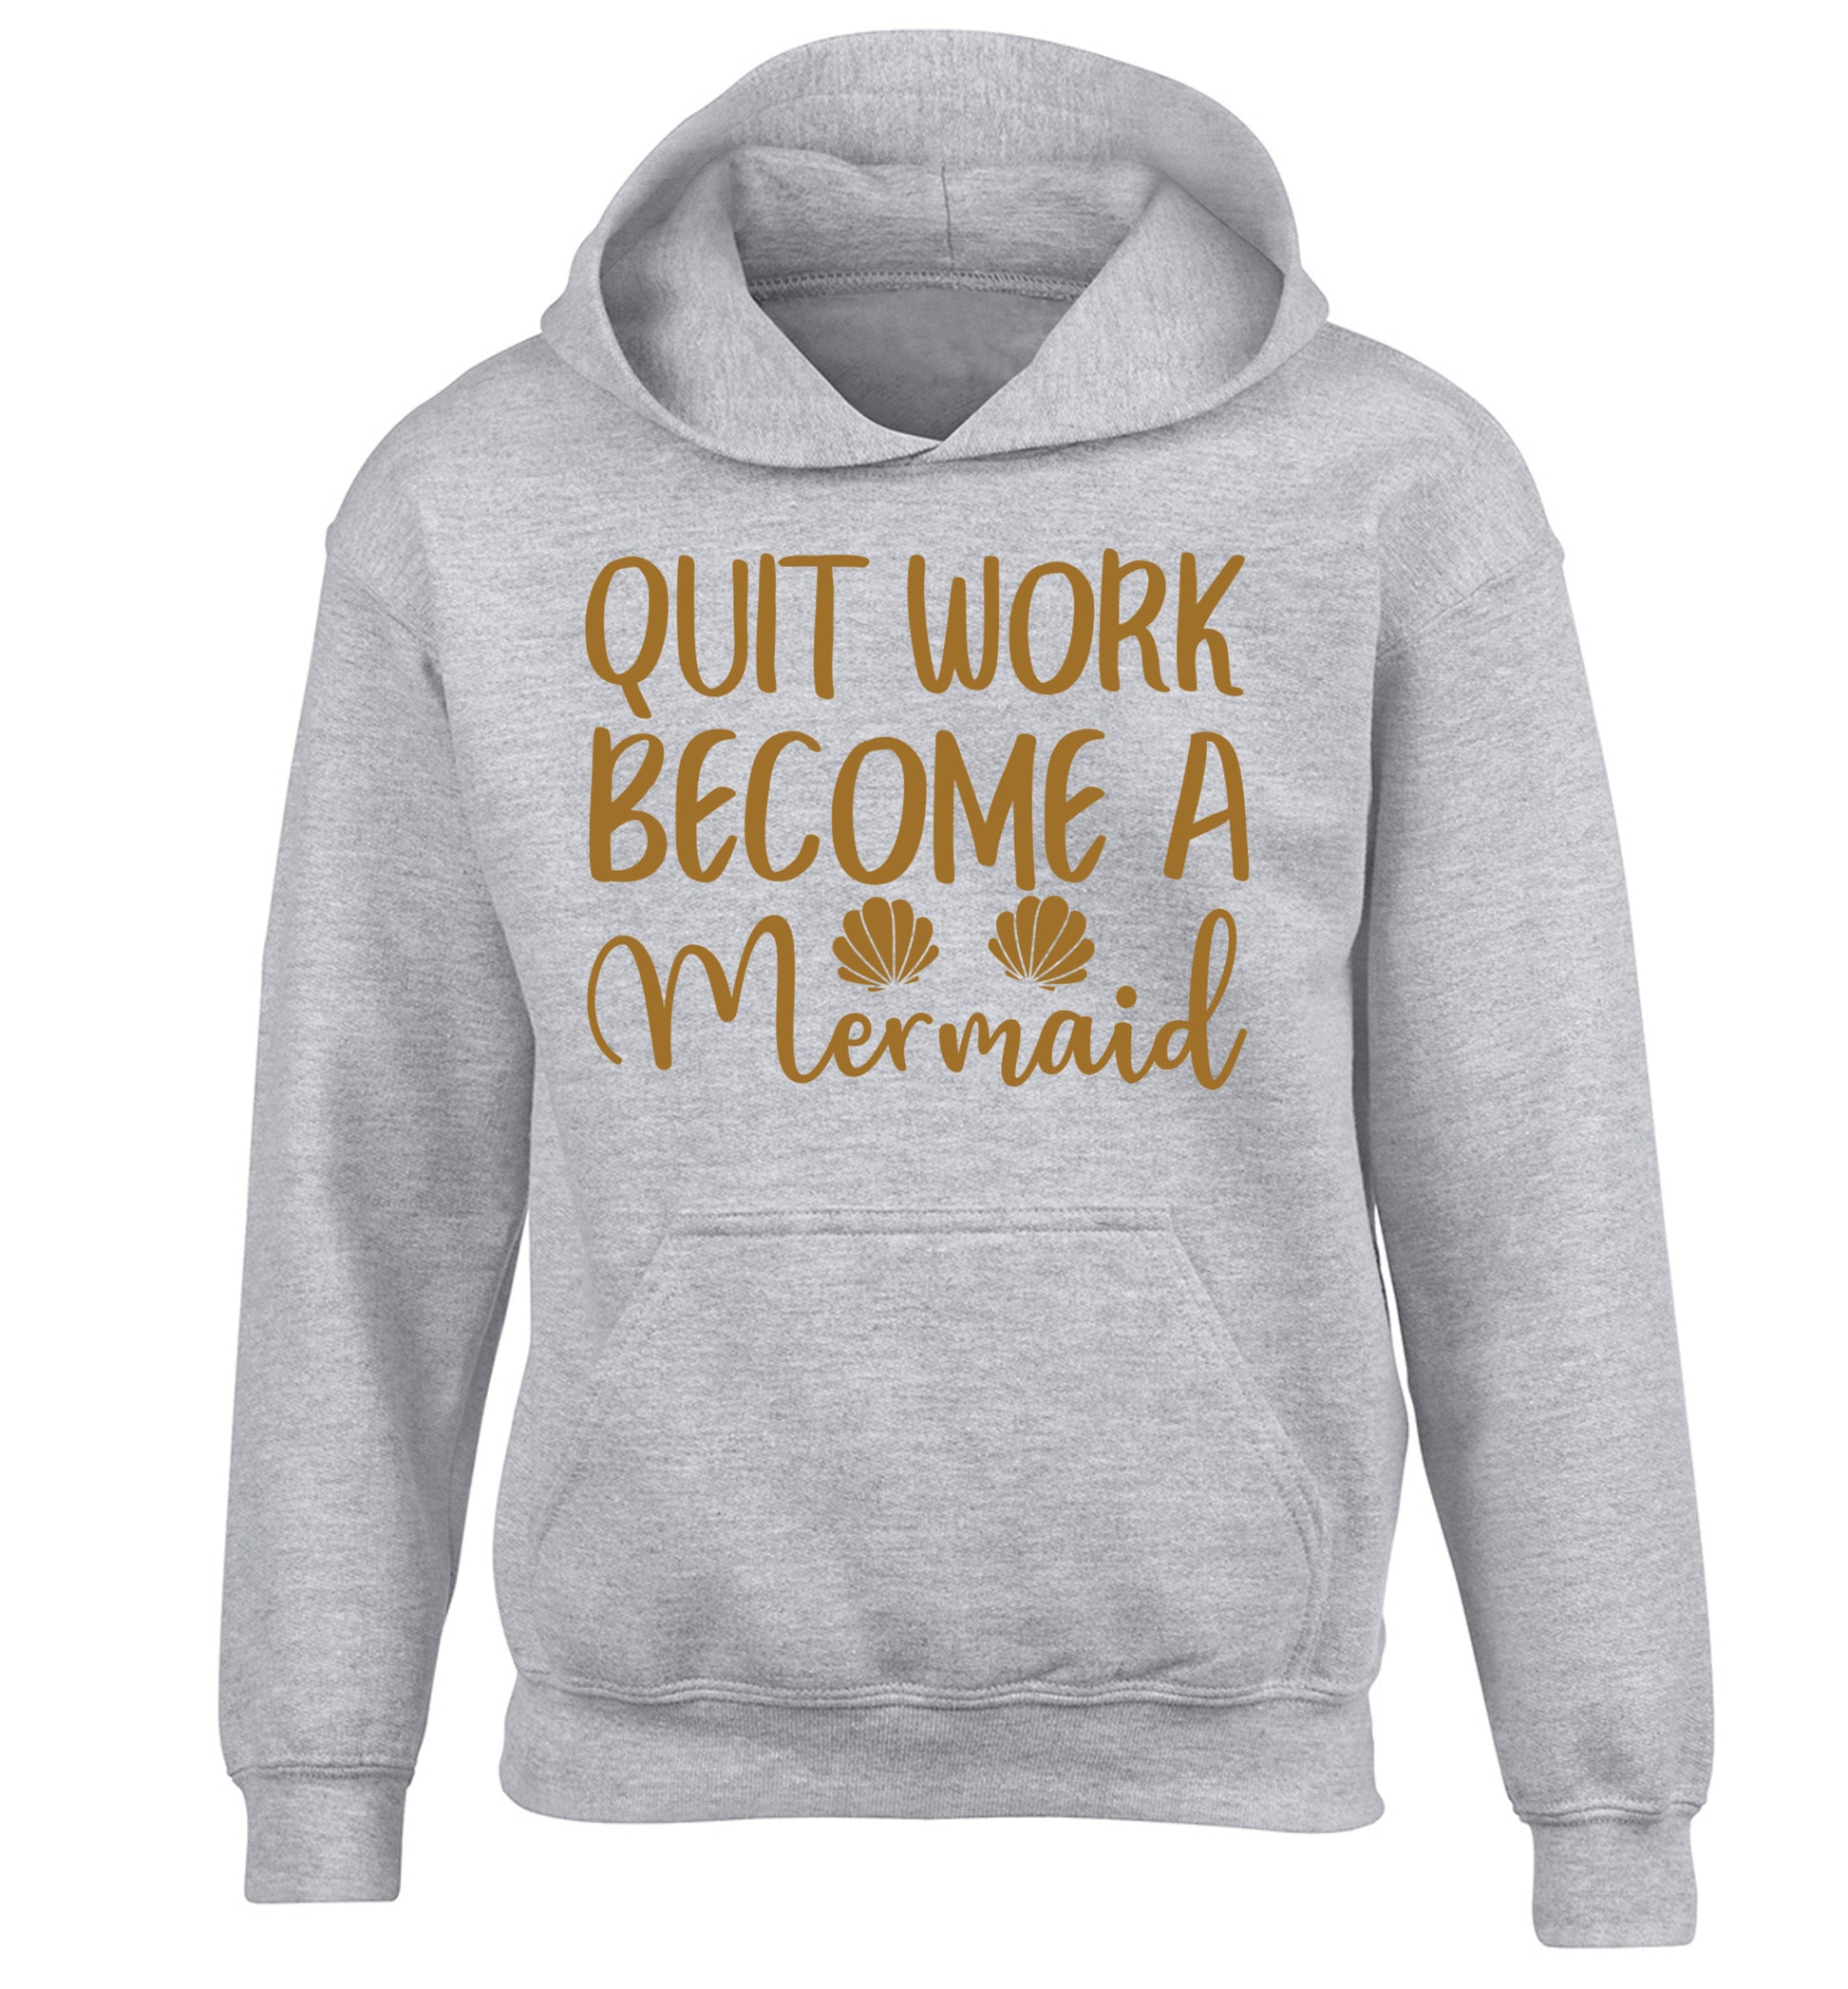 Quit work become a mermaid children's grey hoodie 12-13 Years